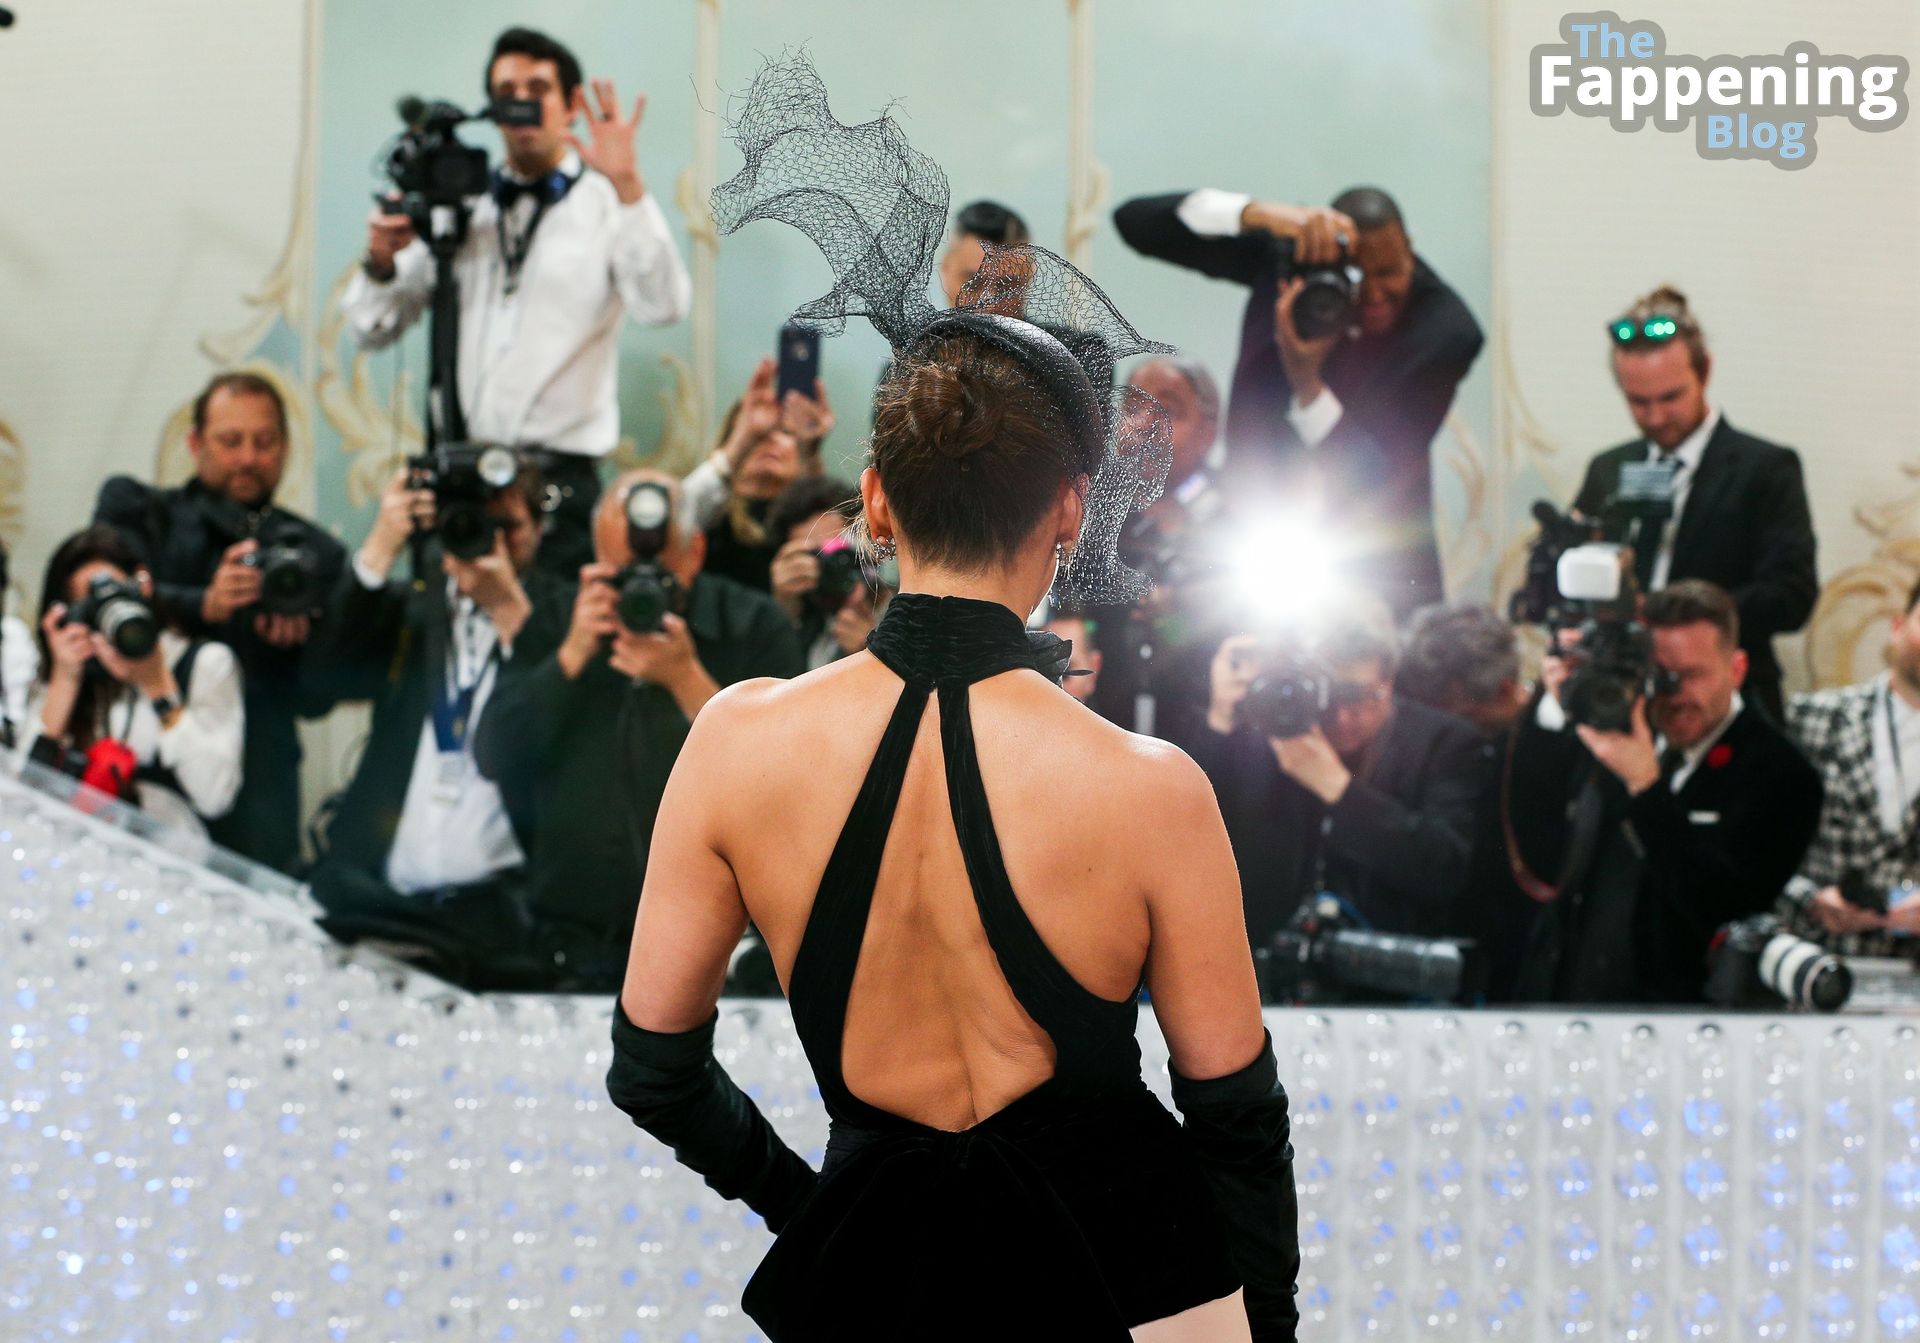 Jennifer-Lopez-Sexy-The-Fappening-Blog-44.jpg